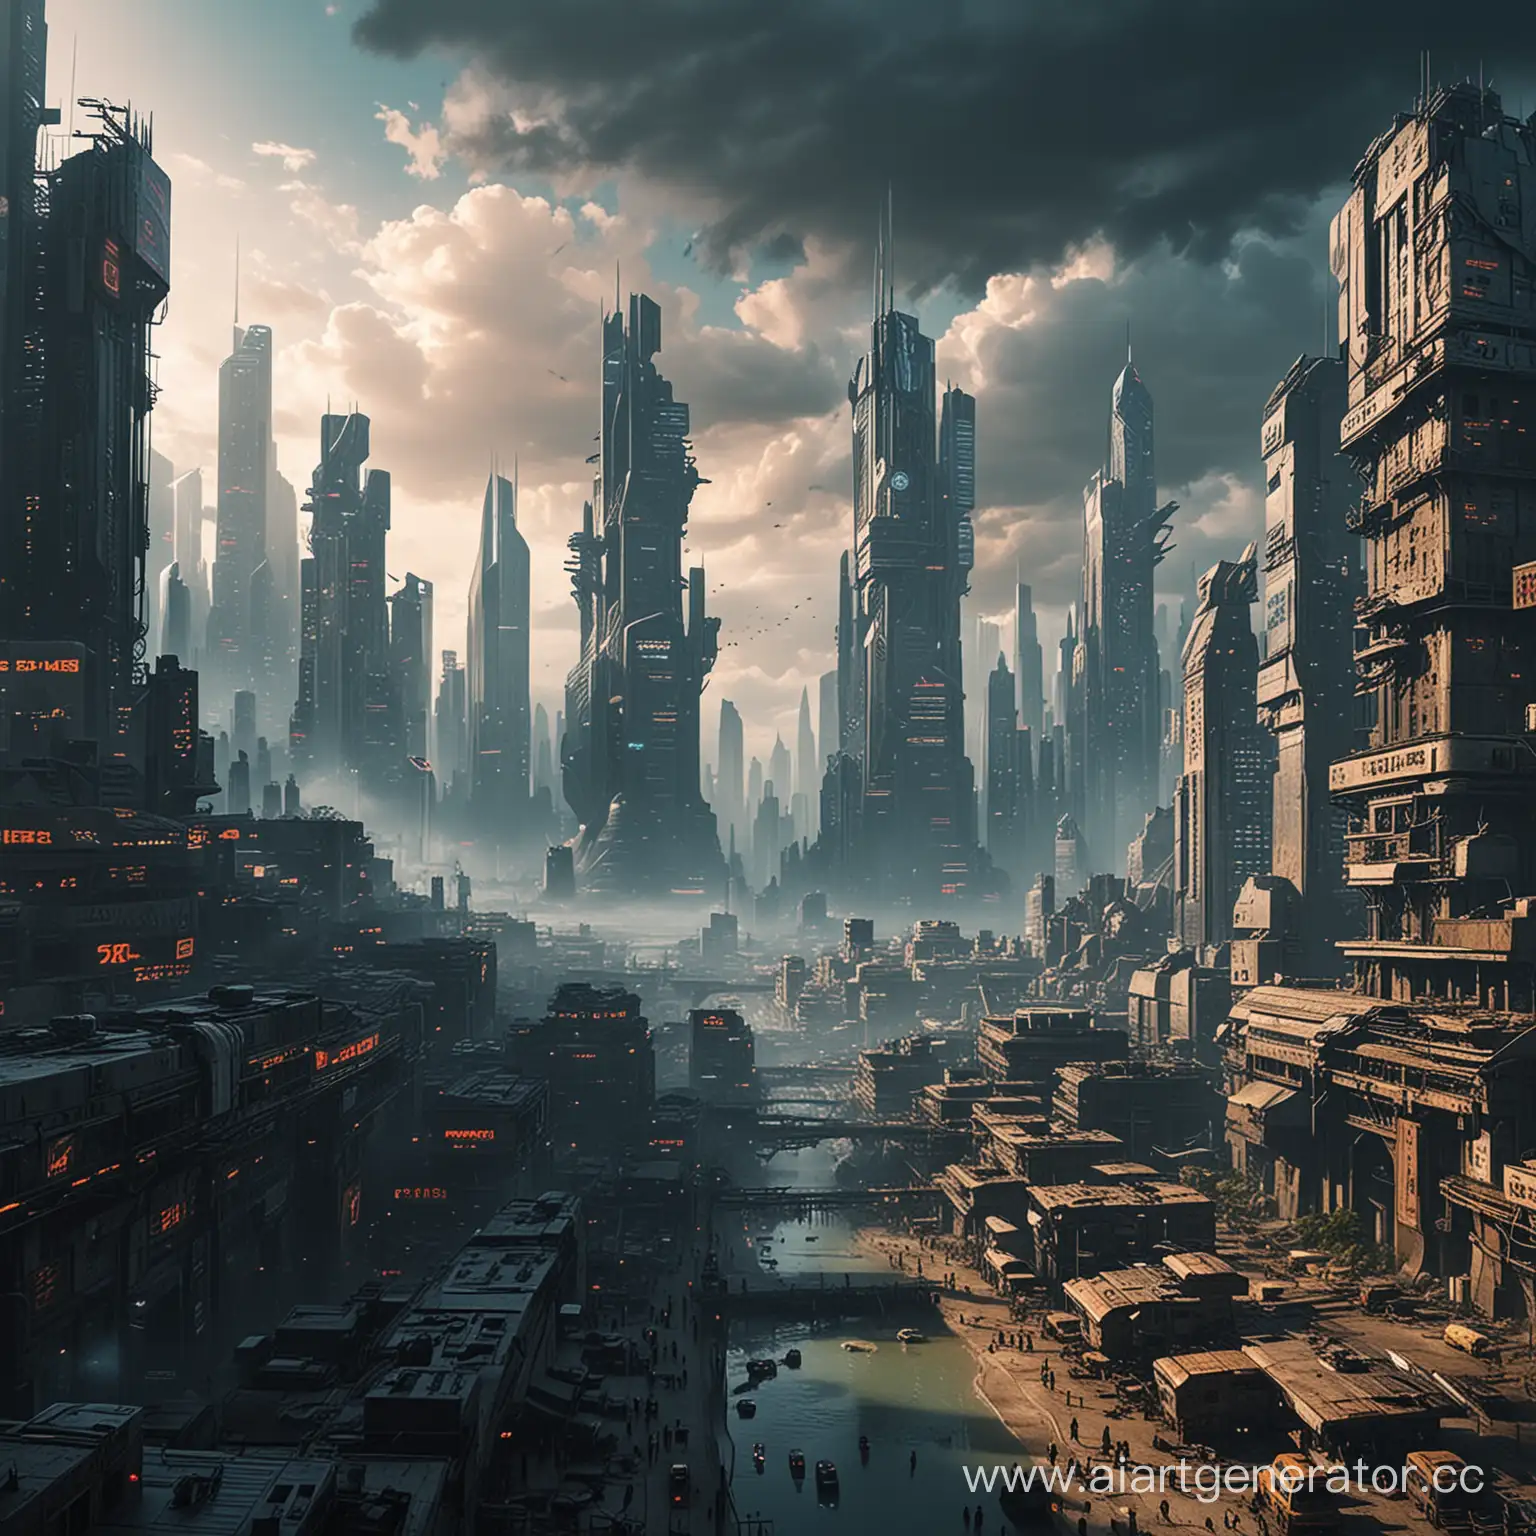 Apocalyptic-Cyberpunk-Cityscape-Futuristic-Urban-Destruction-in-2424